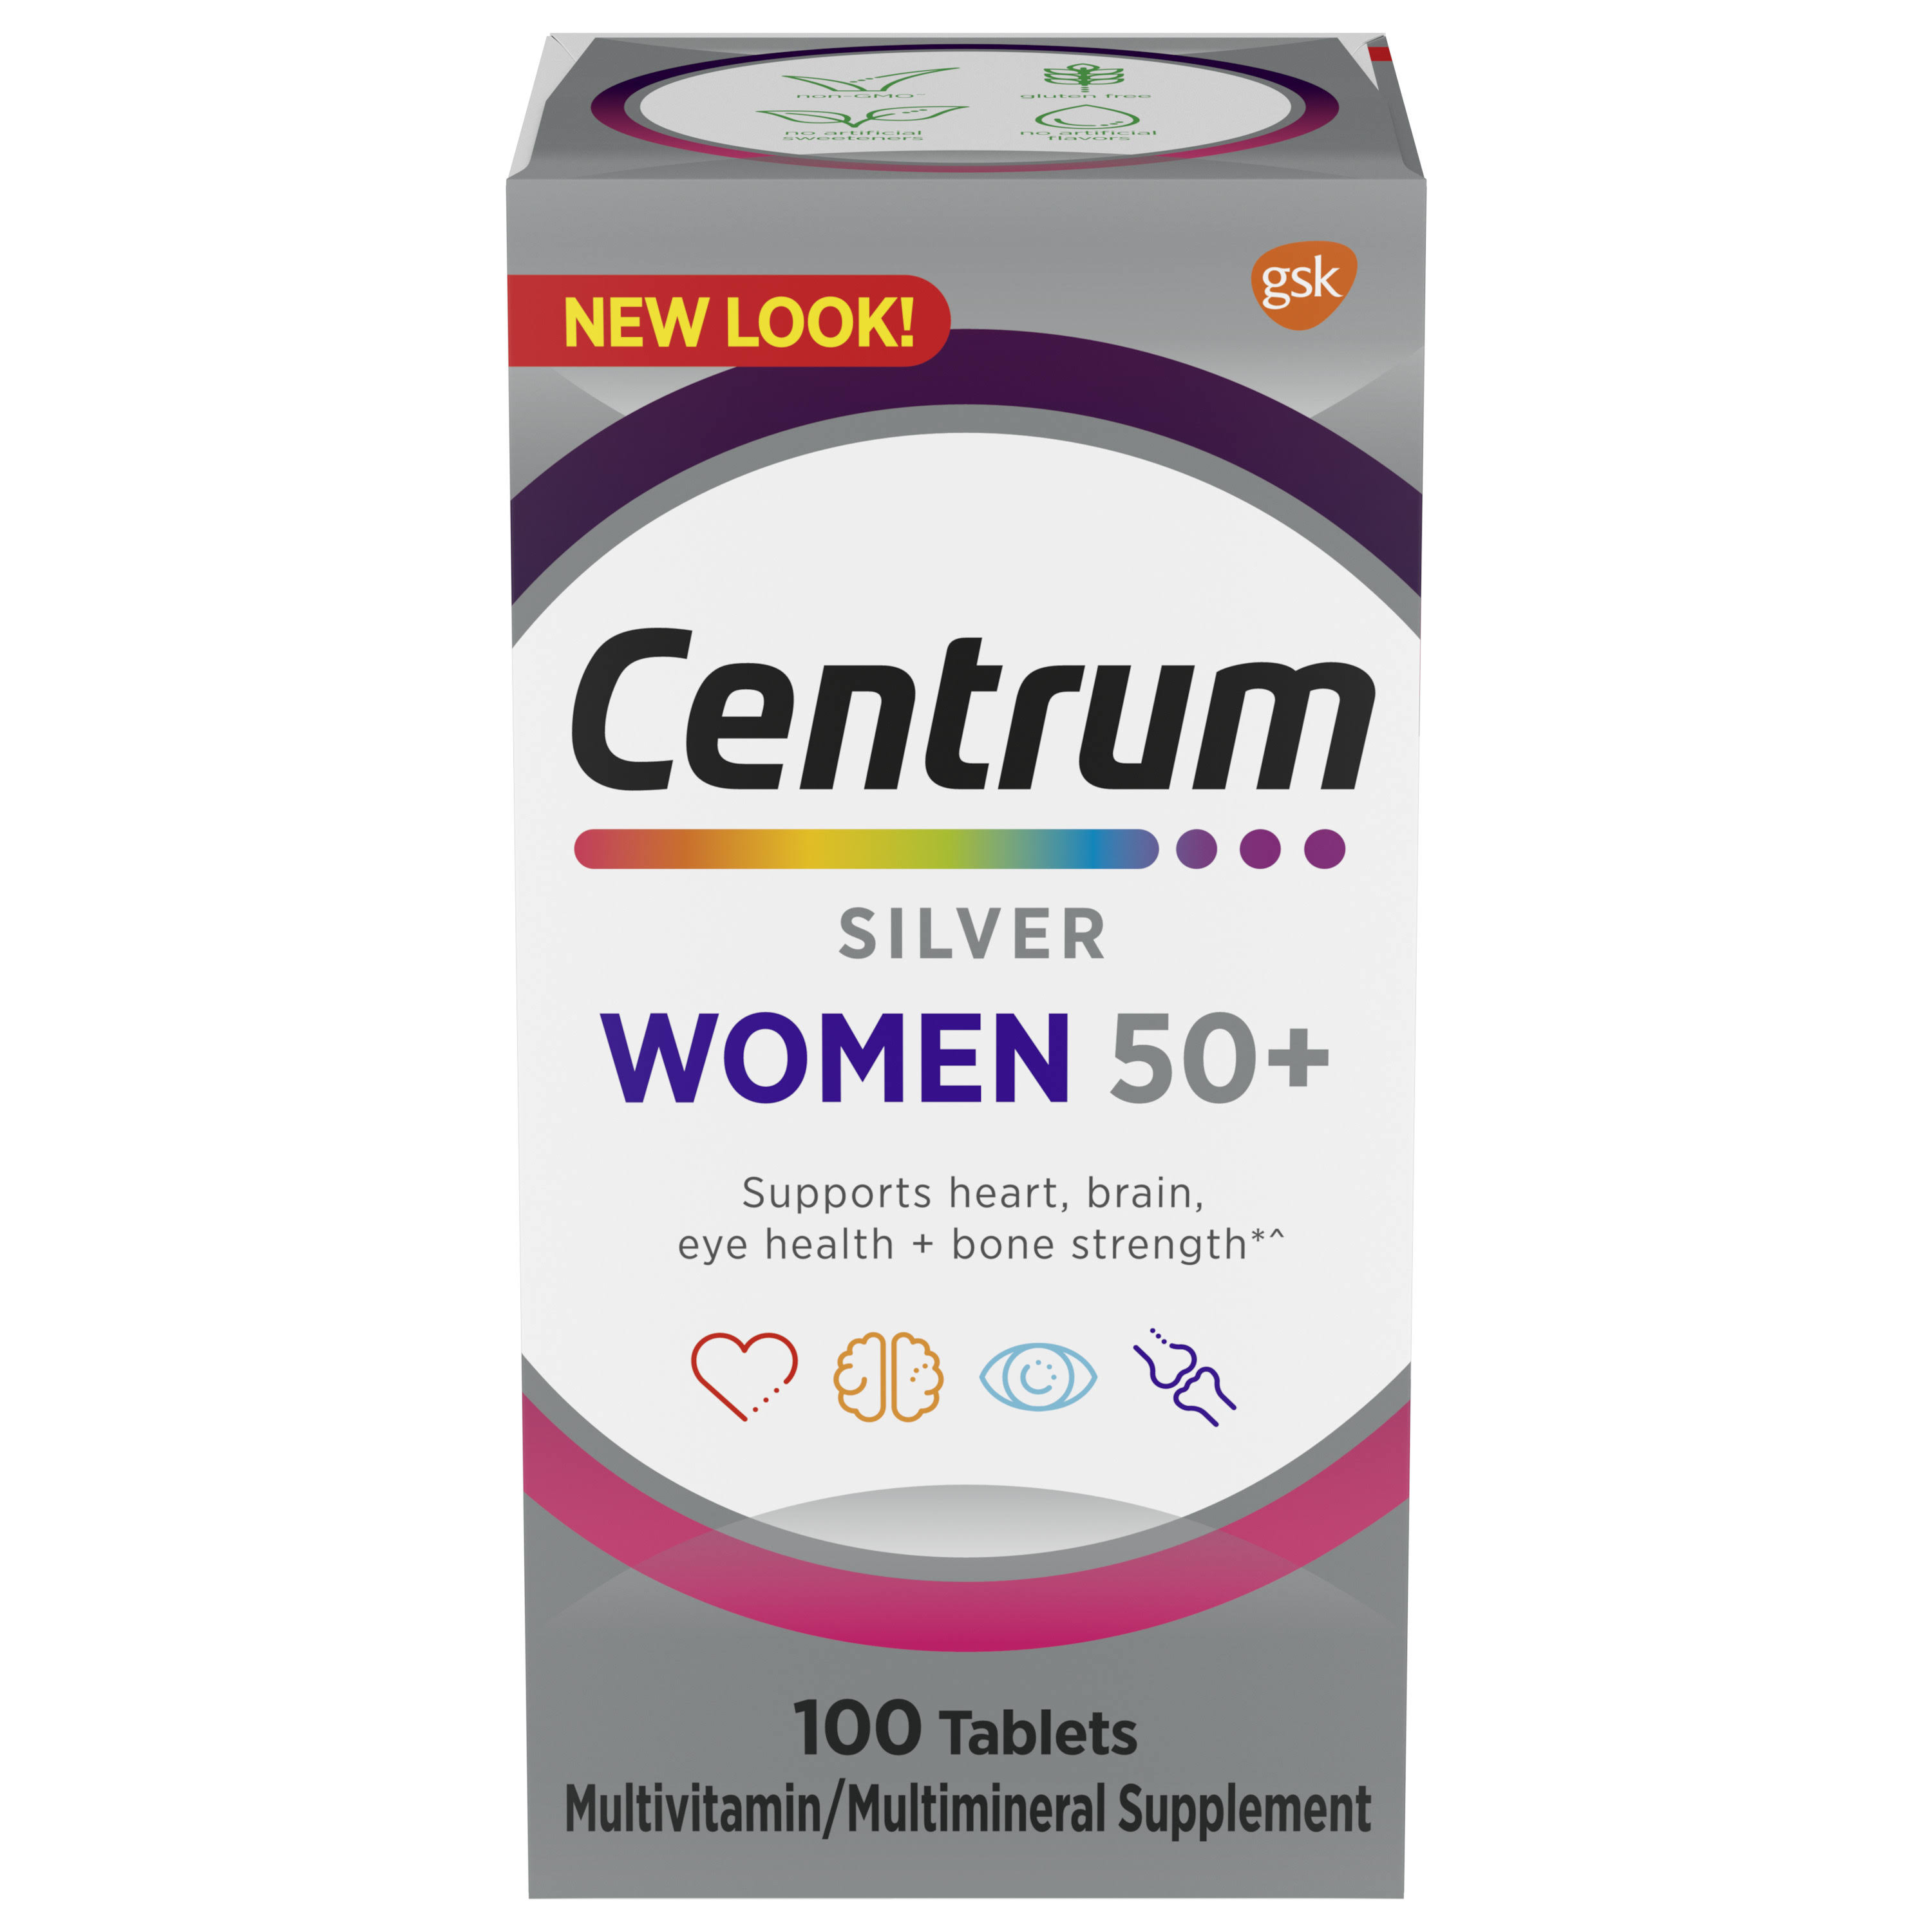 Centrum Silver Multivitamin for Women 50 Plus, Multivitamin/Multimineral Supplement - 100 Count